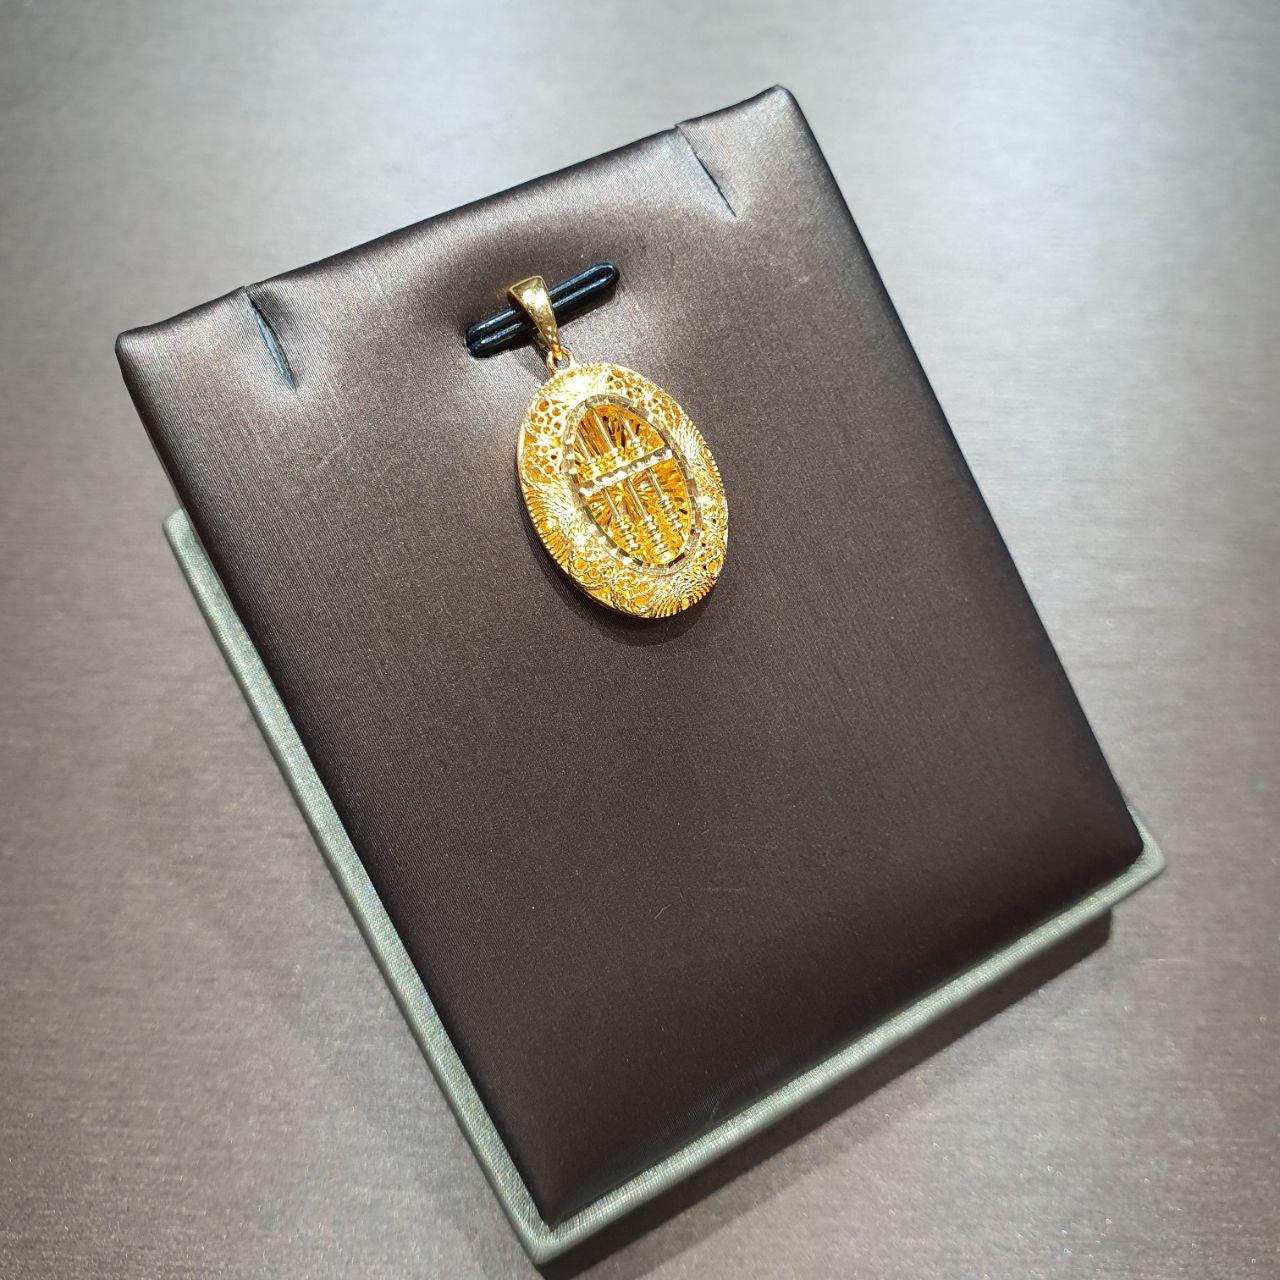 22k / 916 Gold Oval Abacus Pendant-Charms & Pendants-Best Gold Shop